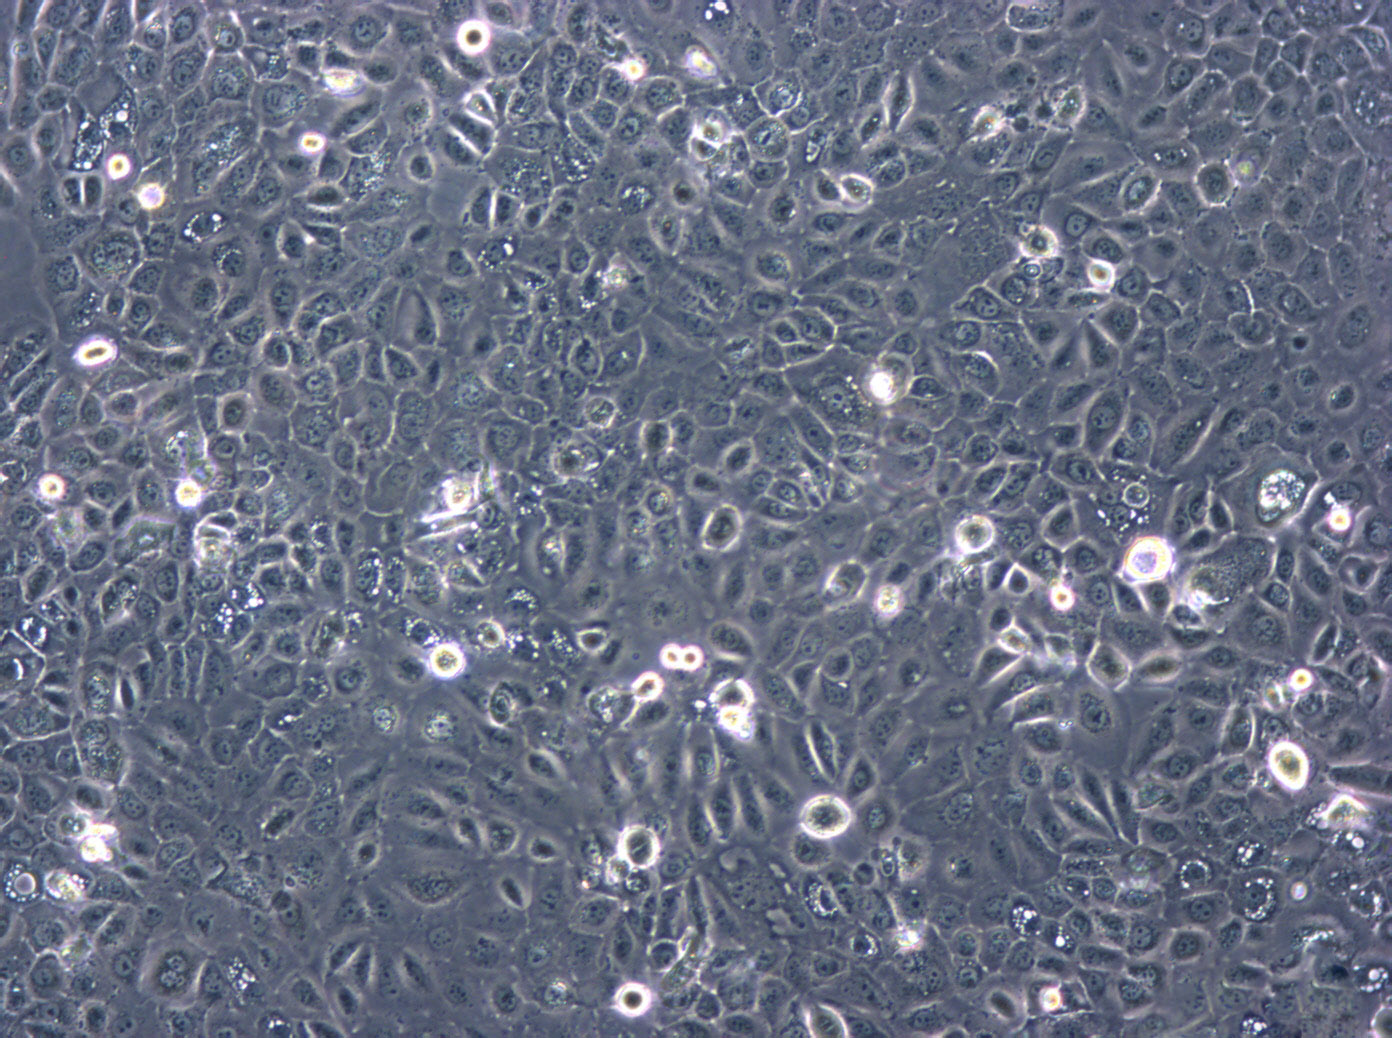 NCI-H748 epithelioid cells人小细胞肺癌细胞系,NCI-H748 epithelioid cells